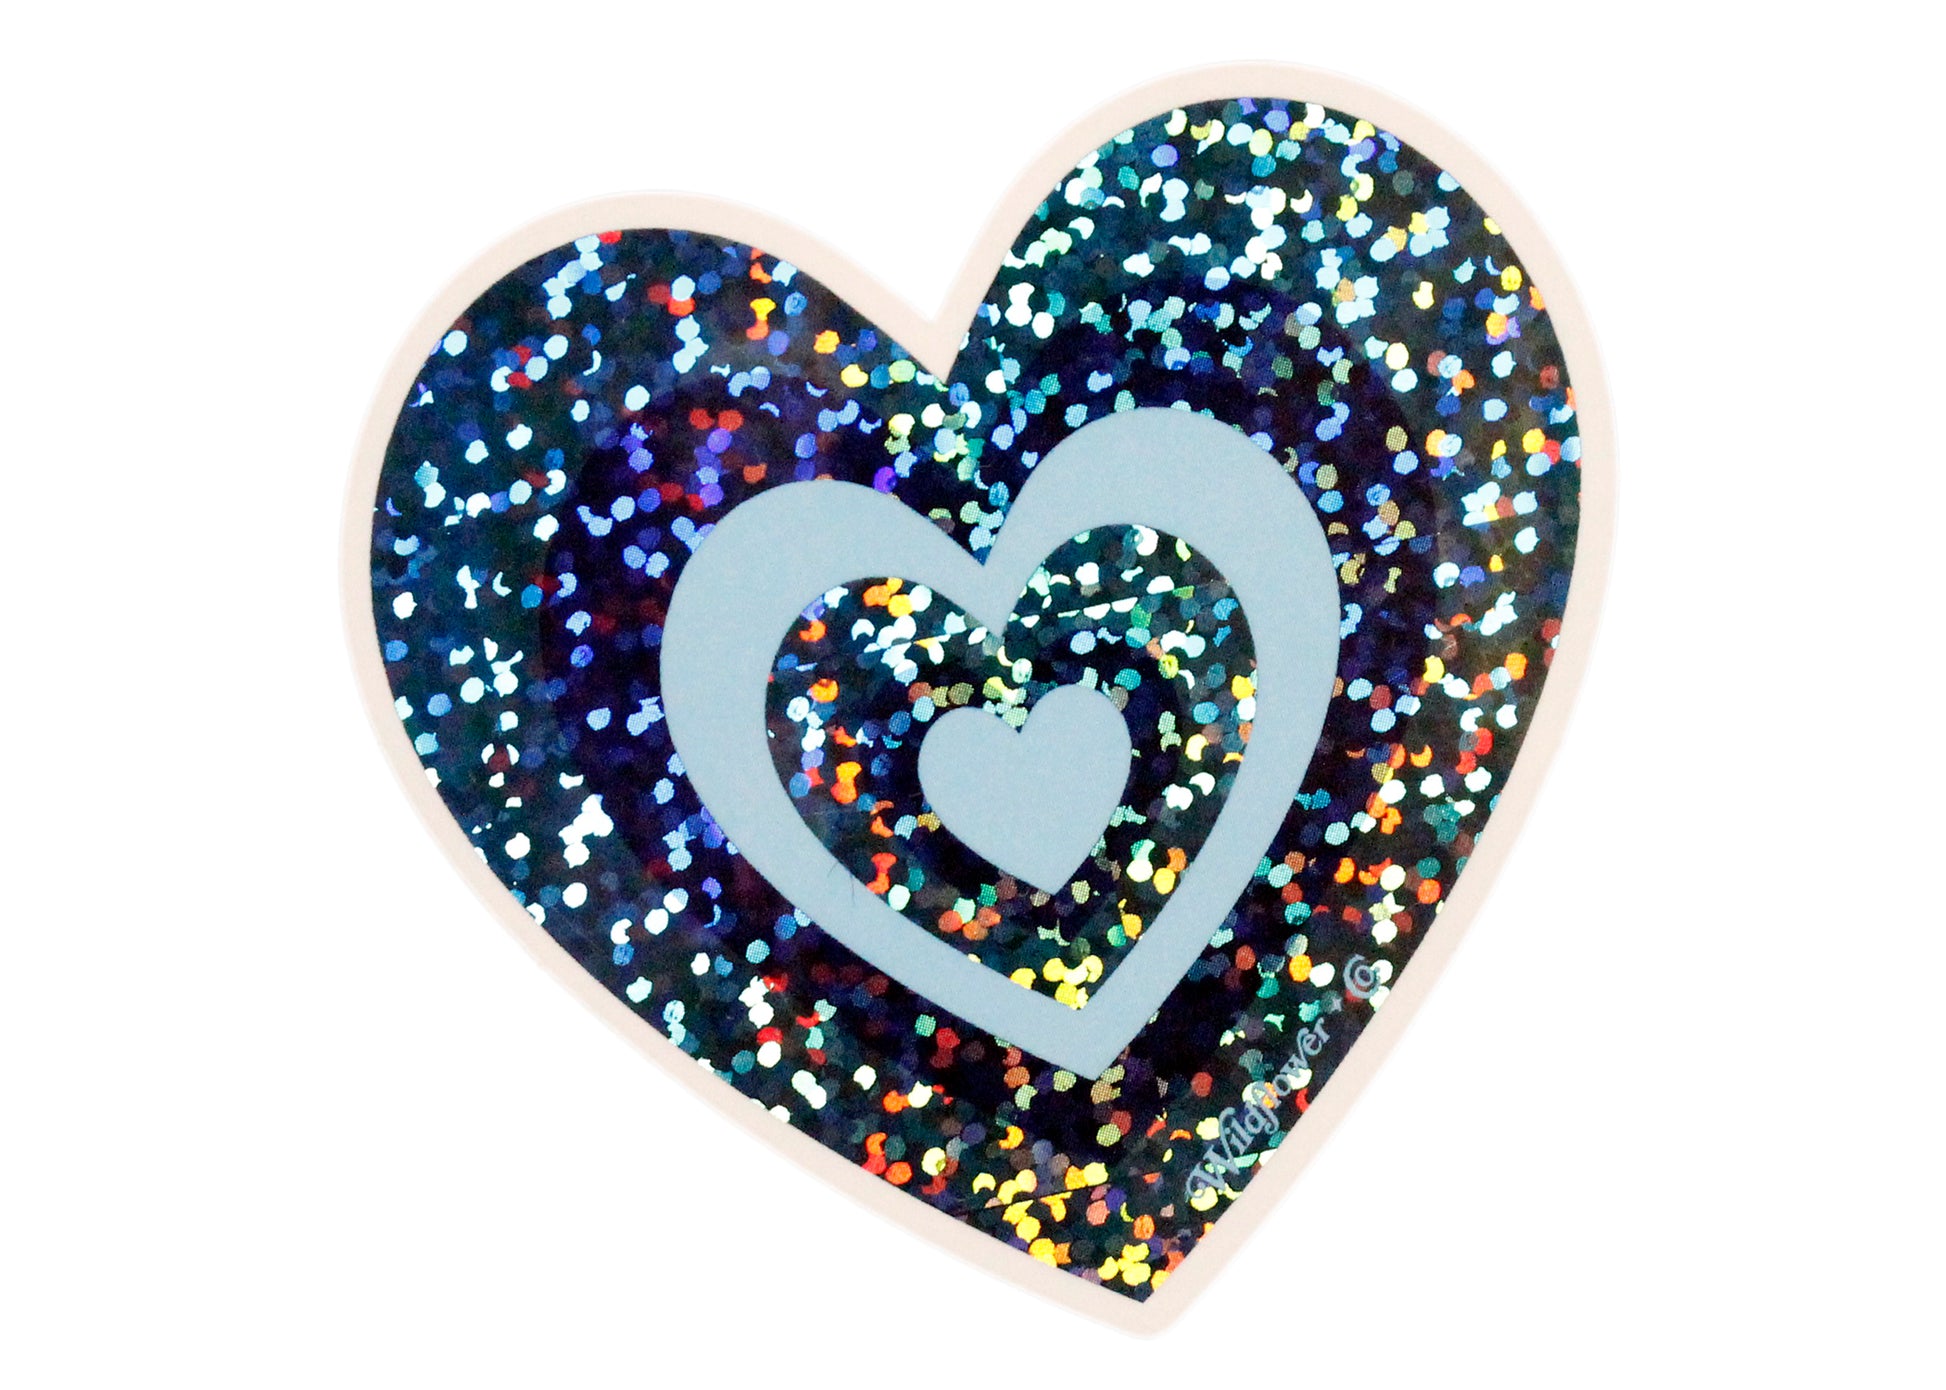 Mini Holographic Heart Stickers